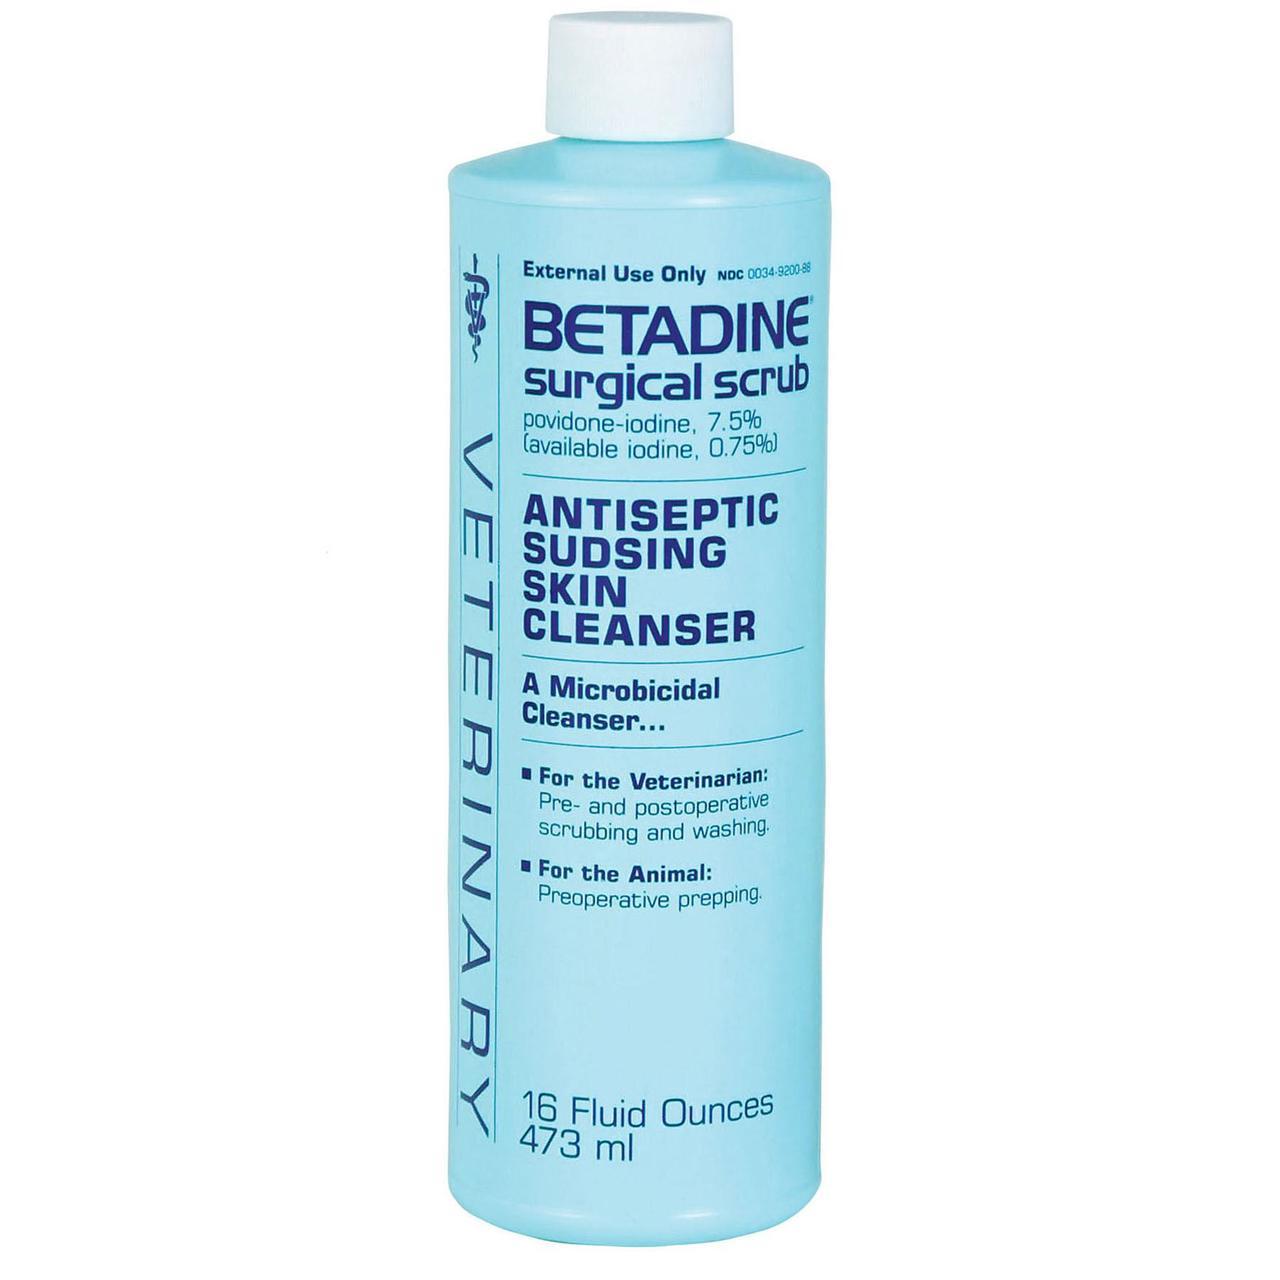 Betadine Surgical Scrub is an Antiseptic sudsing skin cleanser 16OZ Bottle 